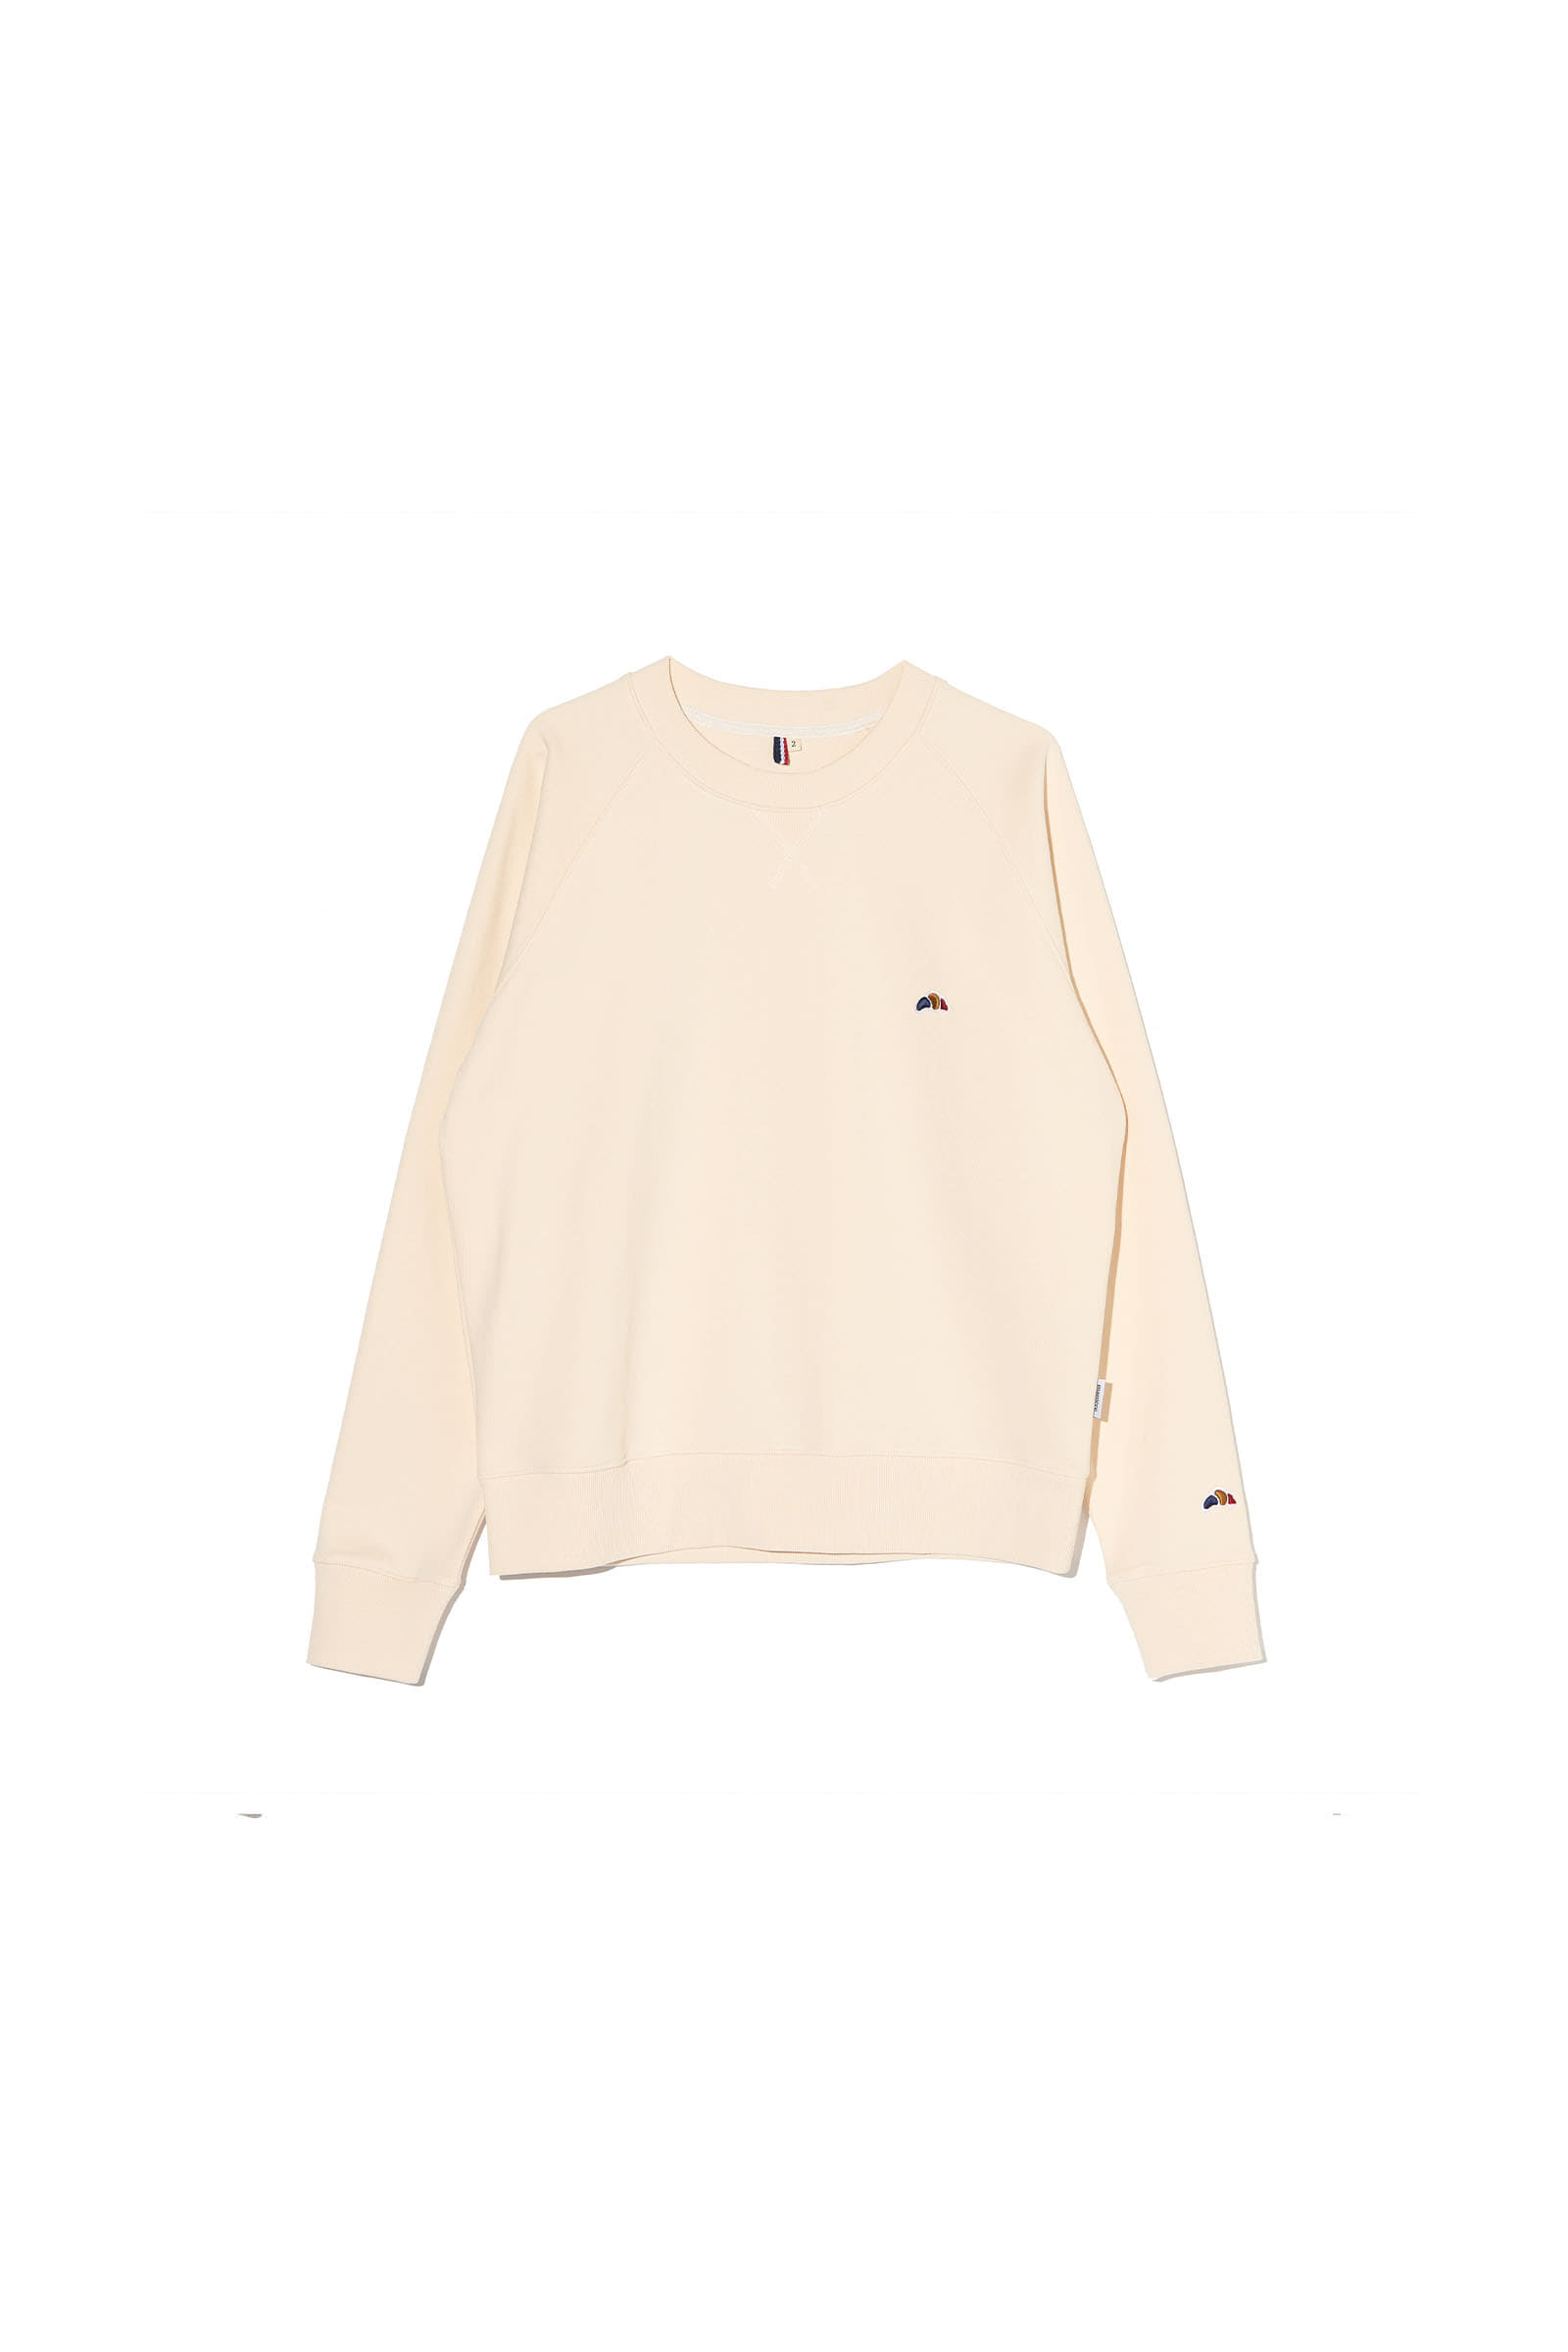 ep.6 Croissant symbol sweatshirts (Ivory)